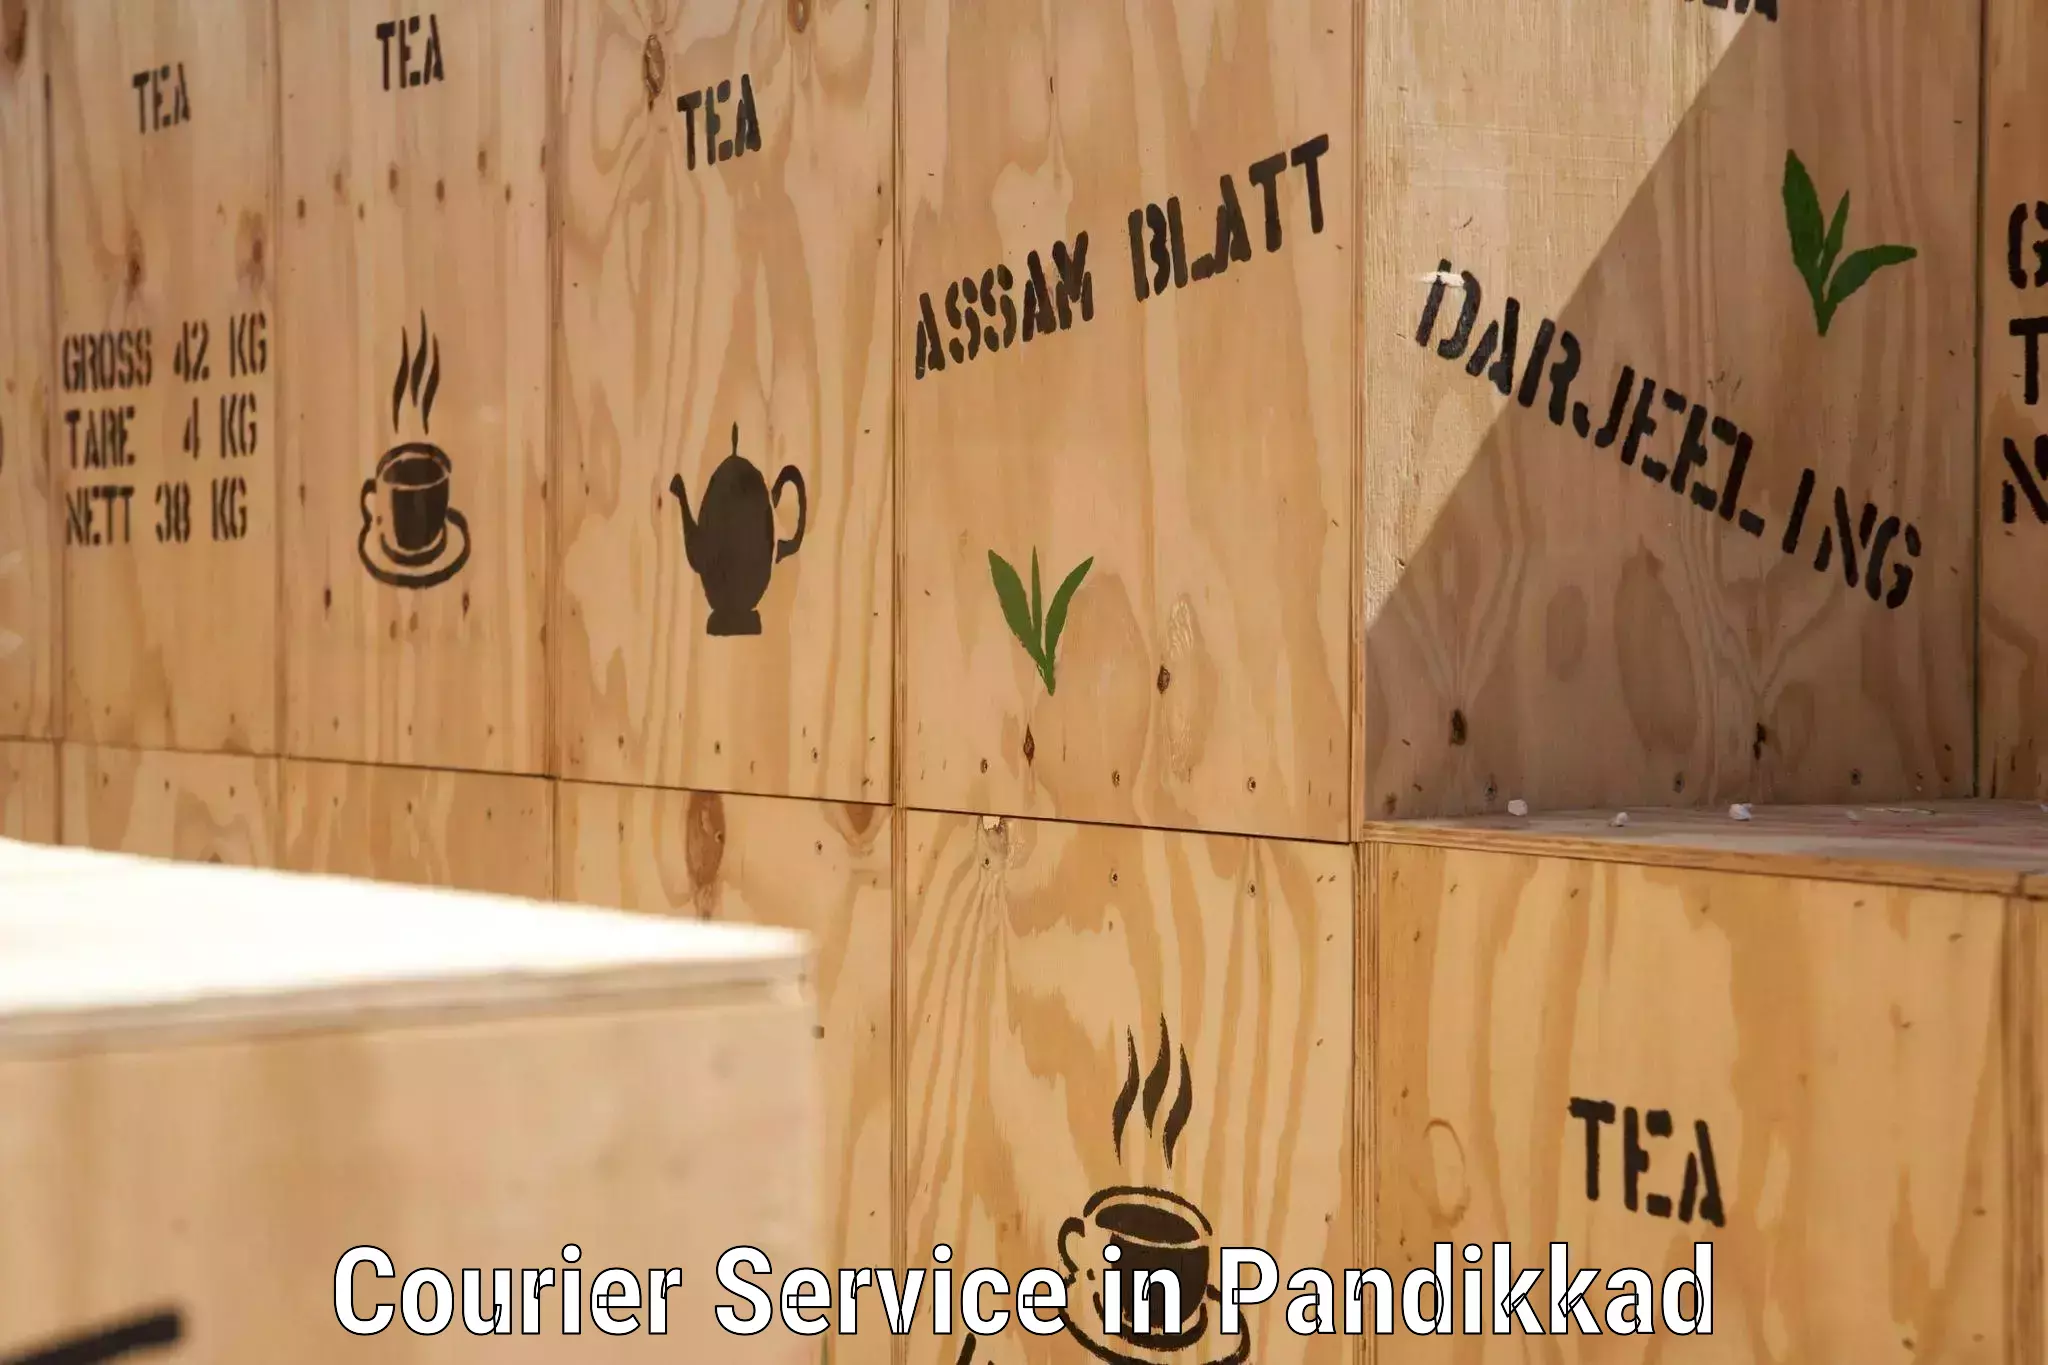 Express delivery capabilities in Pandikkad